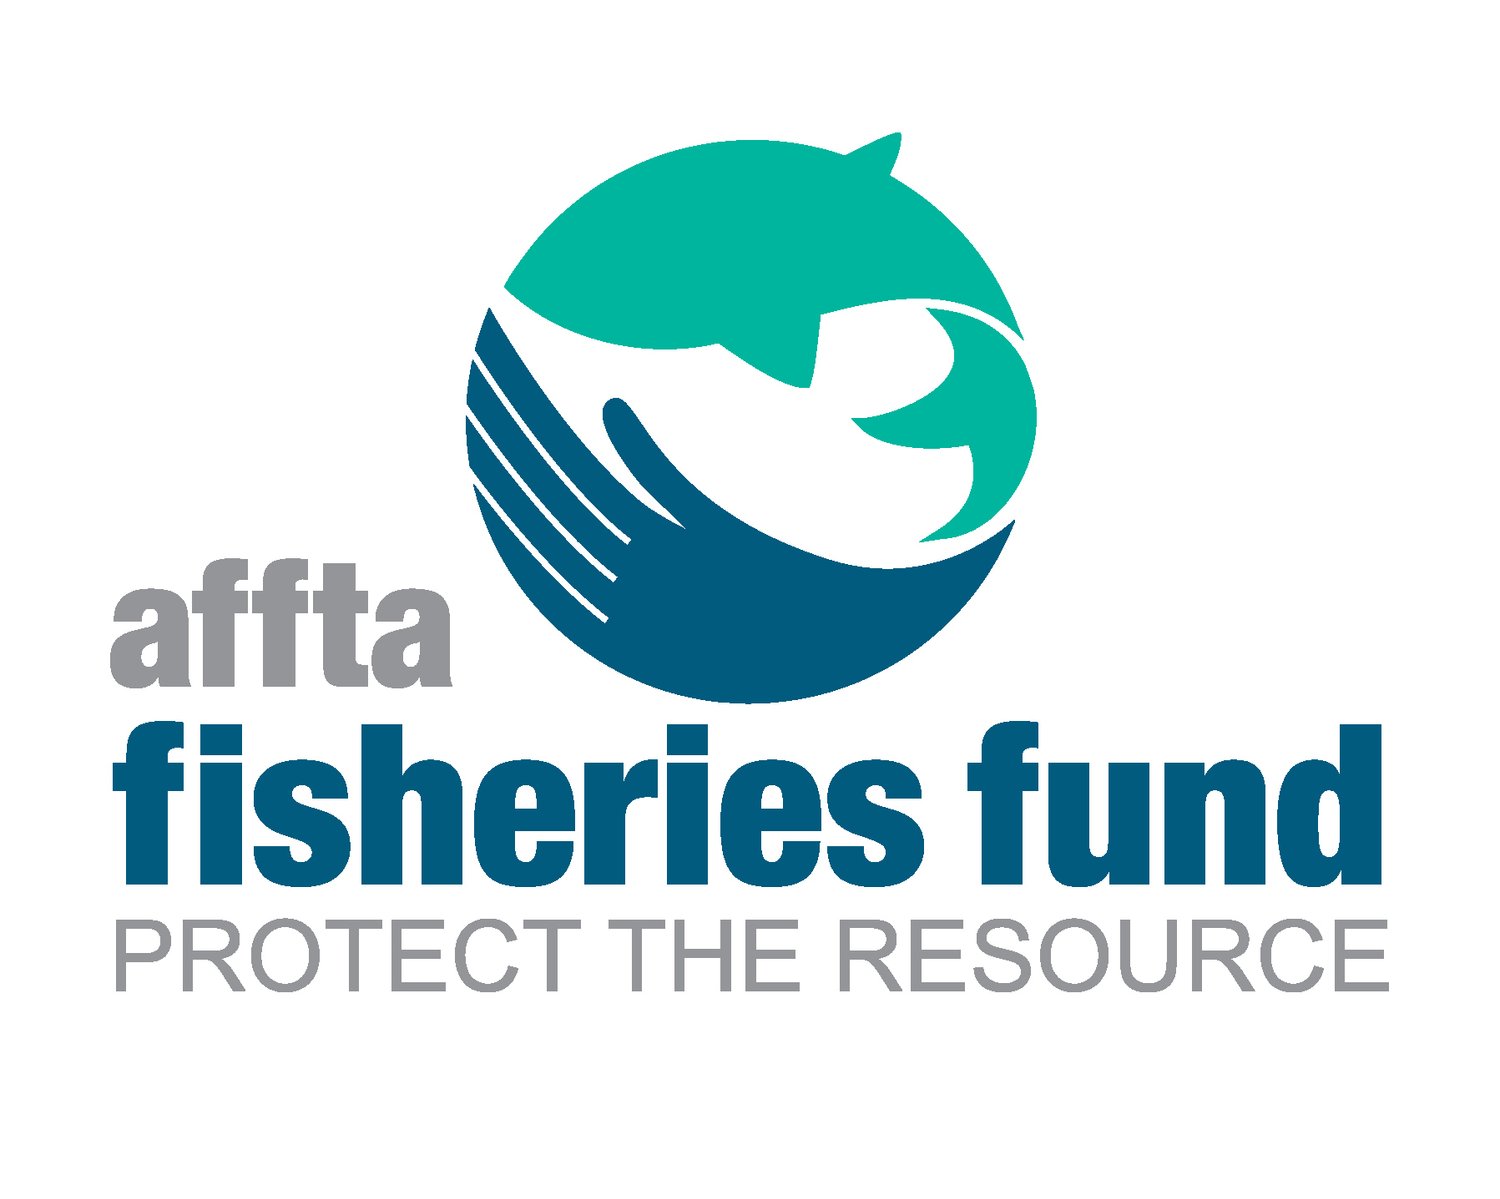 AFFTA Fisheries Fund